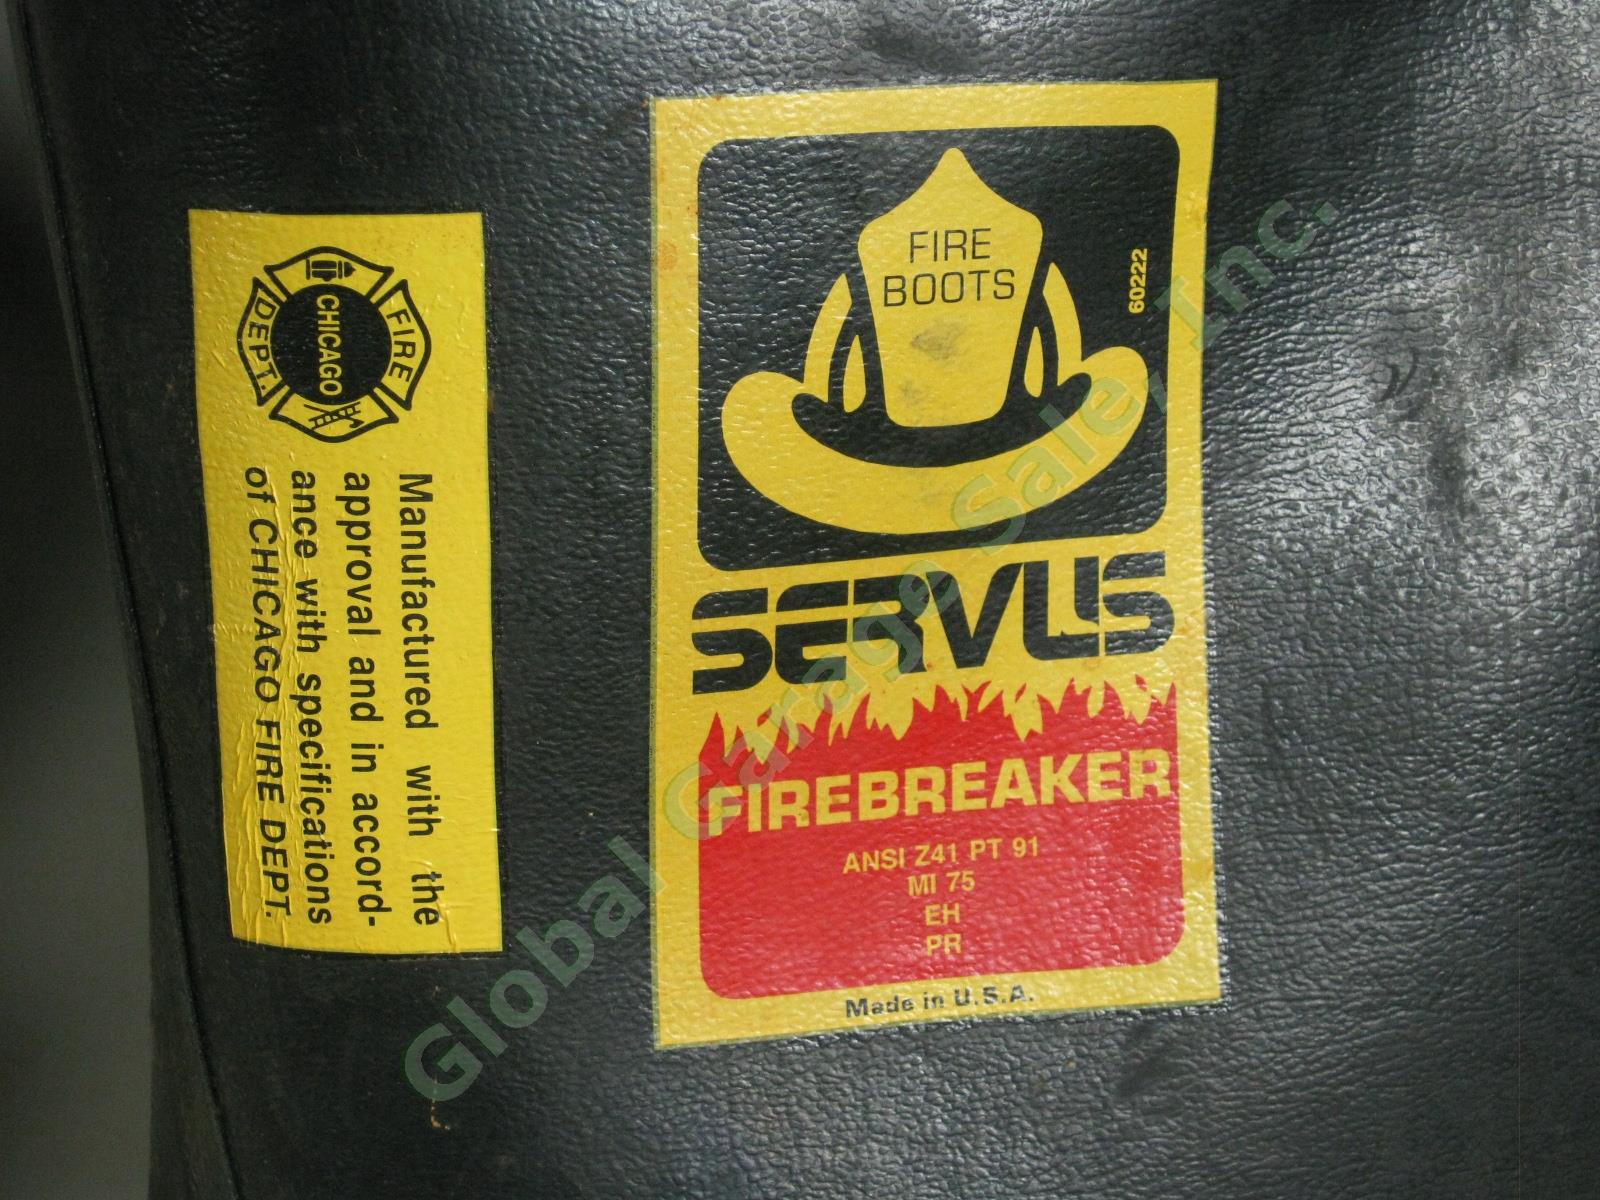 Servus Firebreaker Firefighter 31" Hip Boots 9.5 9 1/2 Wide Chicago Fire Dept NR 5